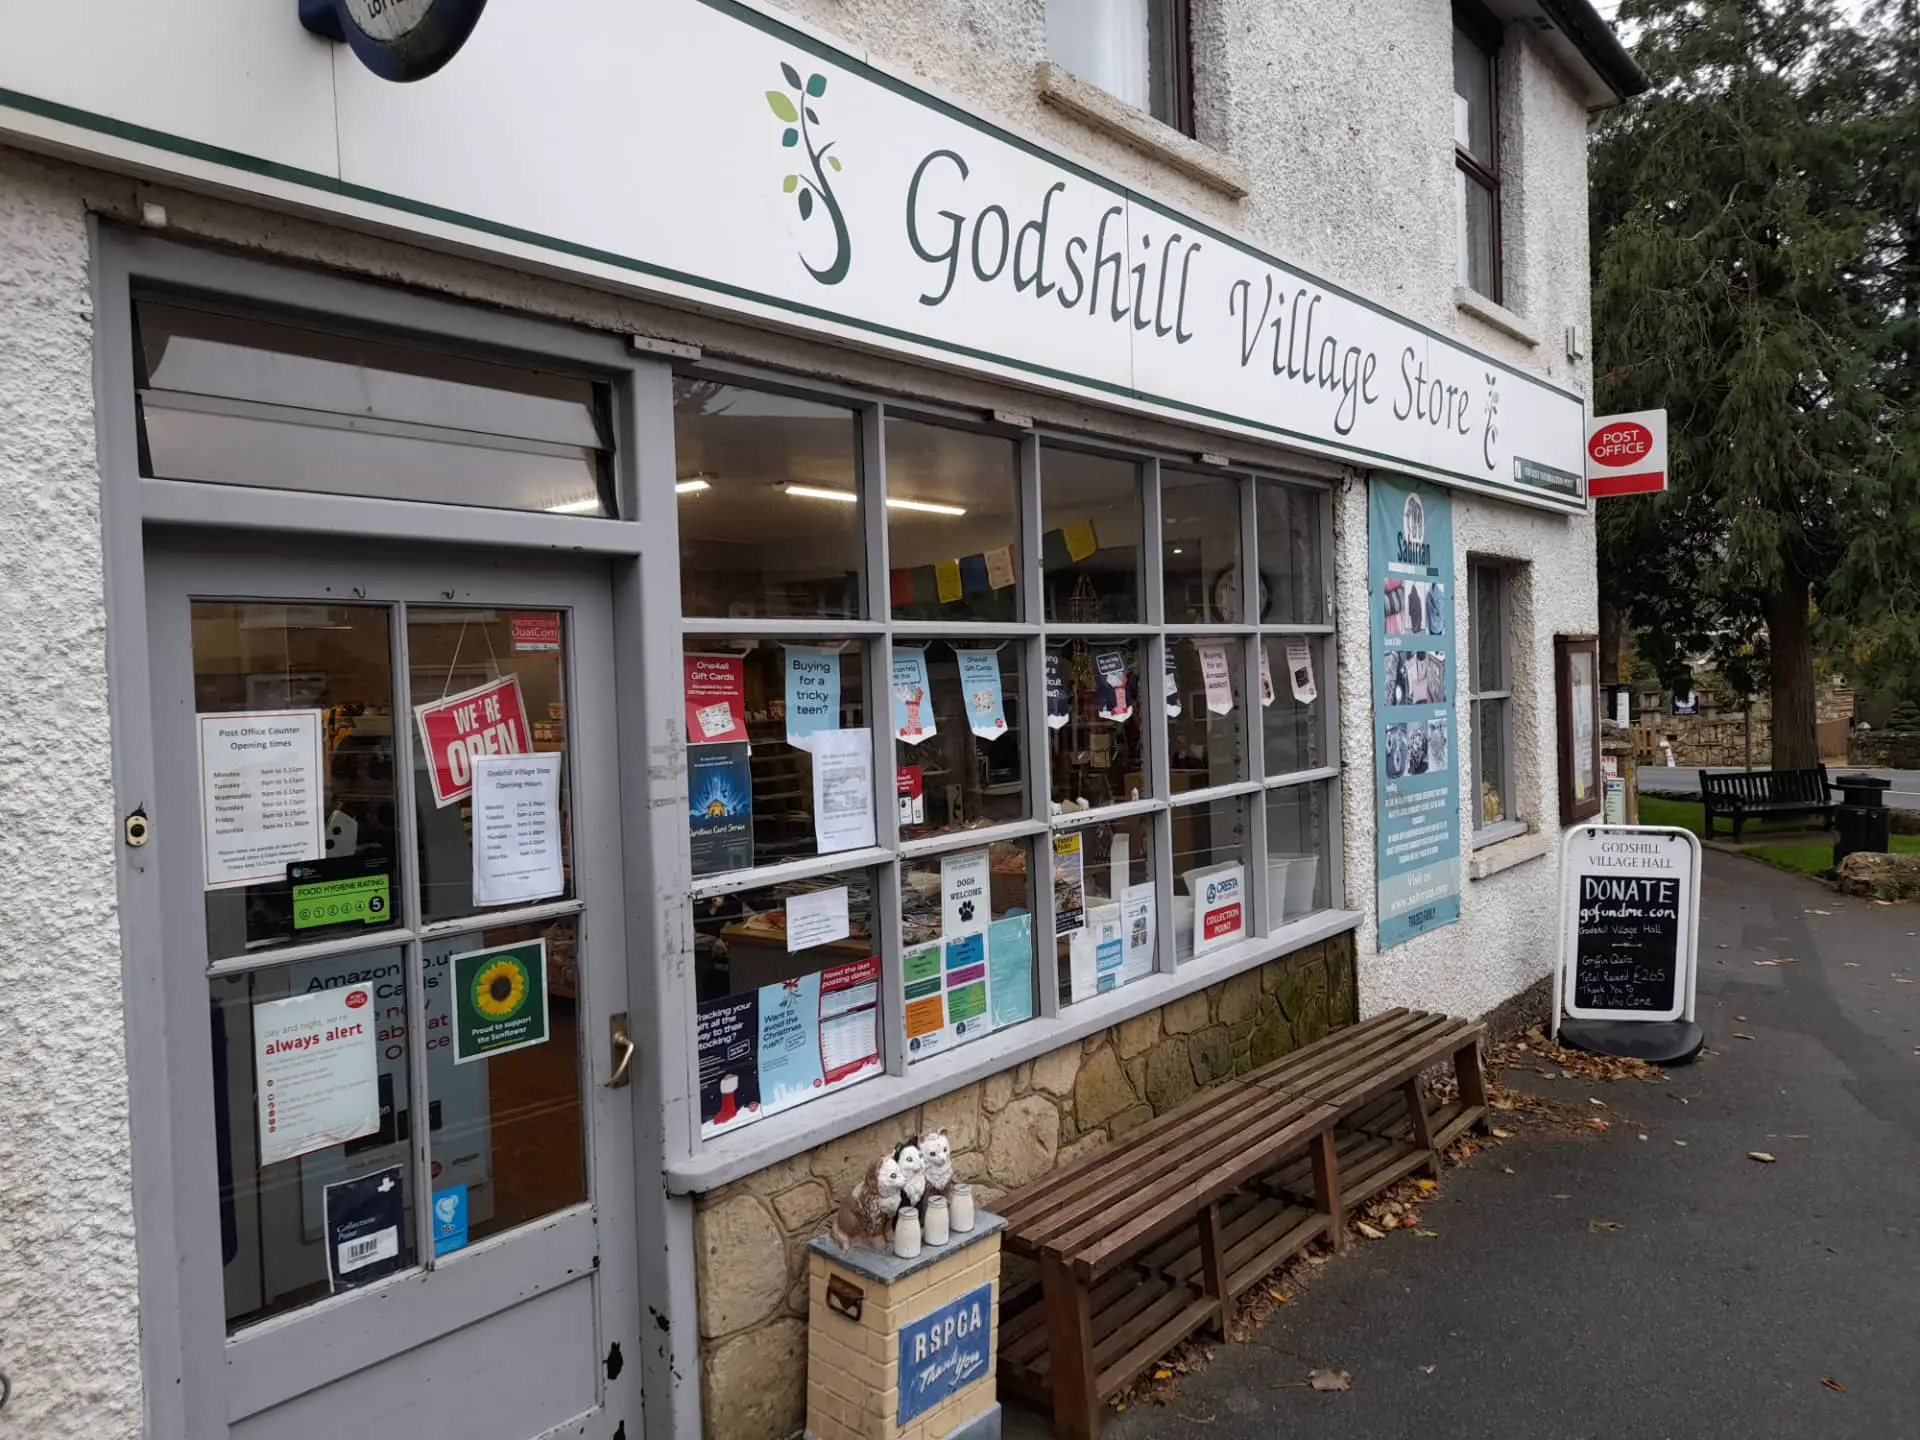 Godshill Post Office